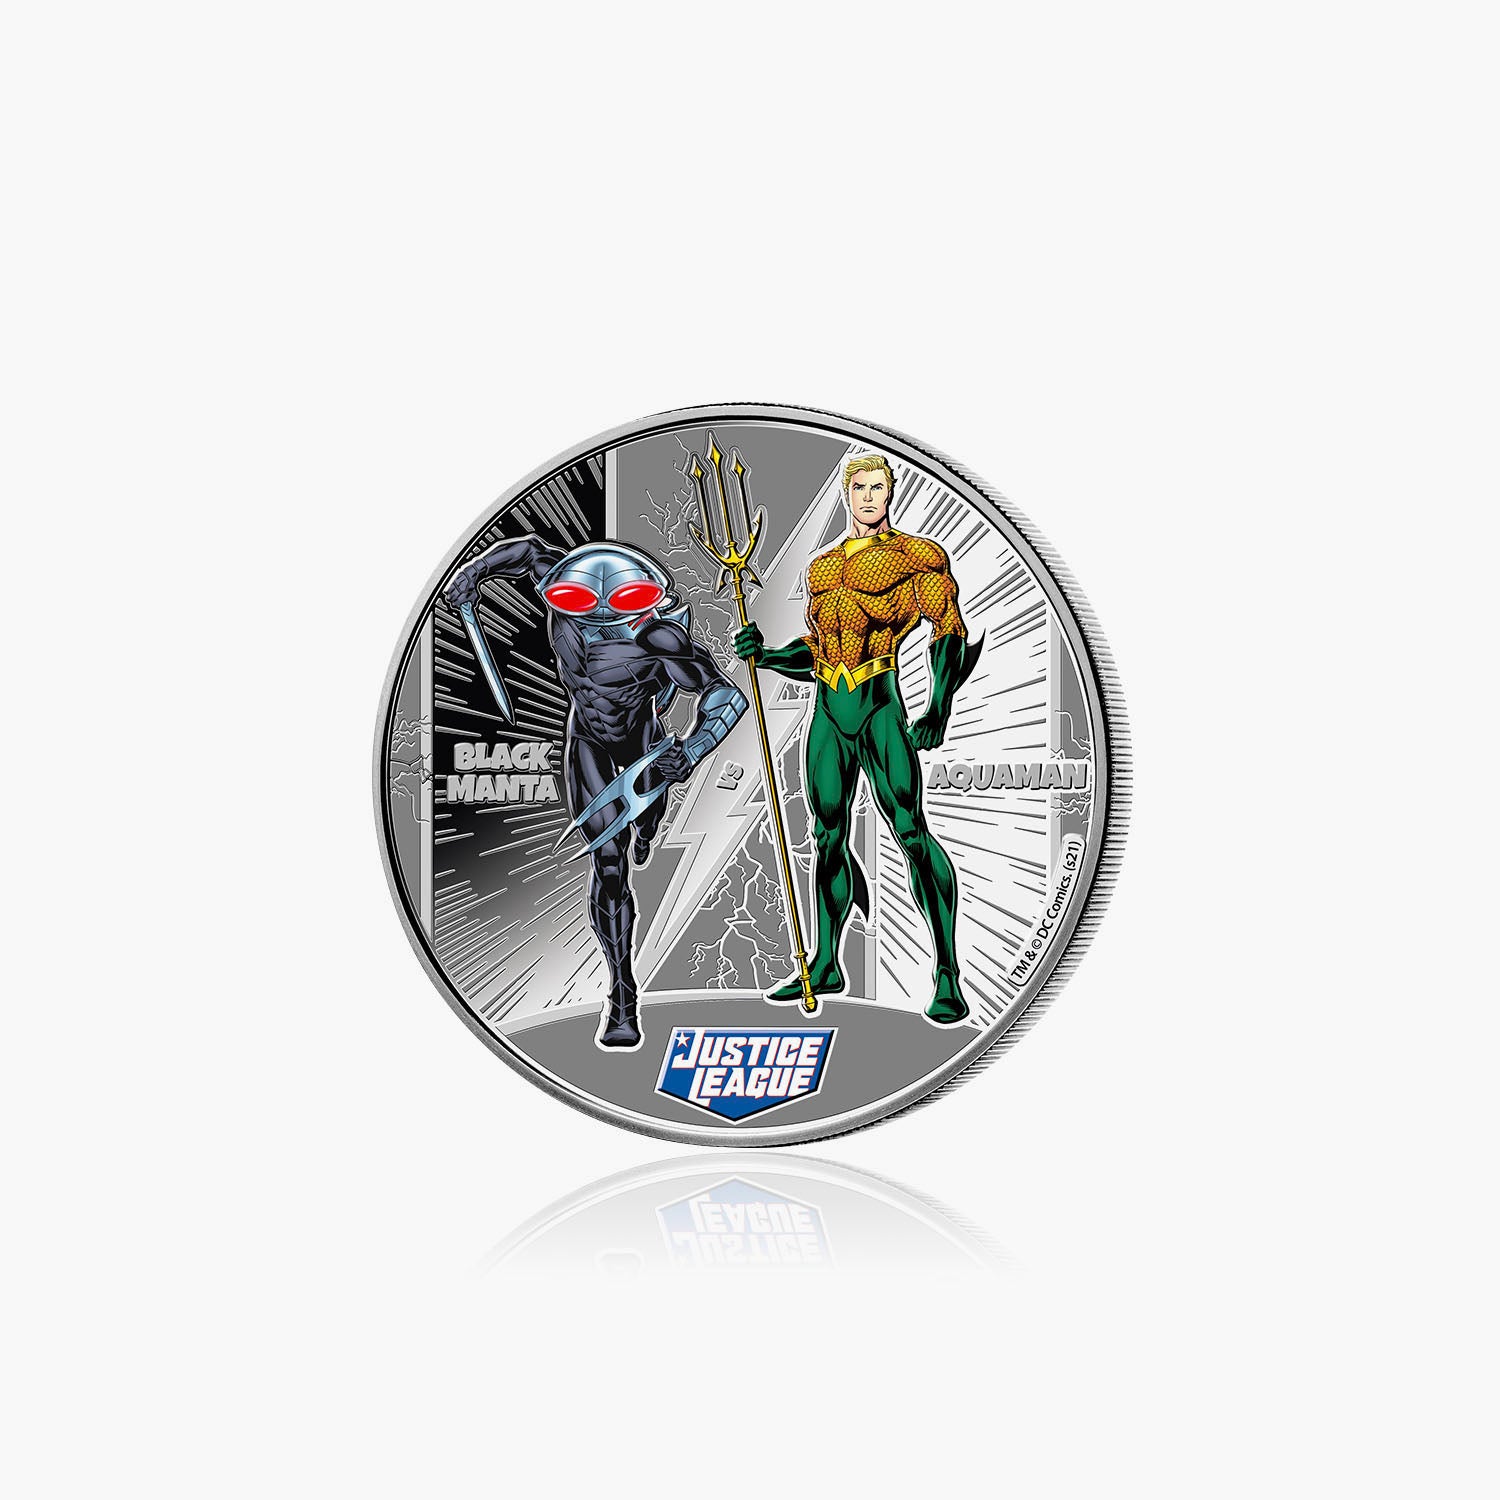 Justice League - Aquaman vs Black Manta 1/2oz Silver Coin